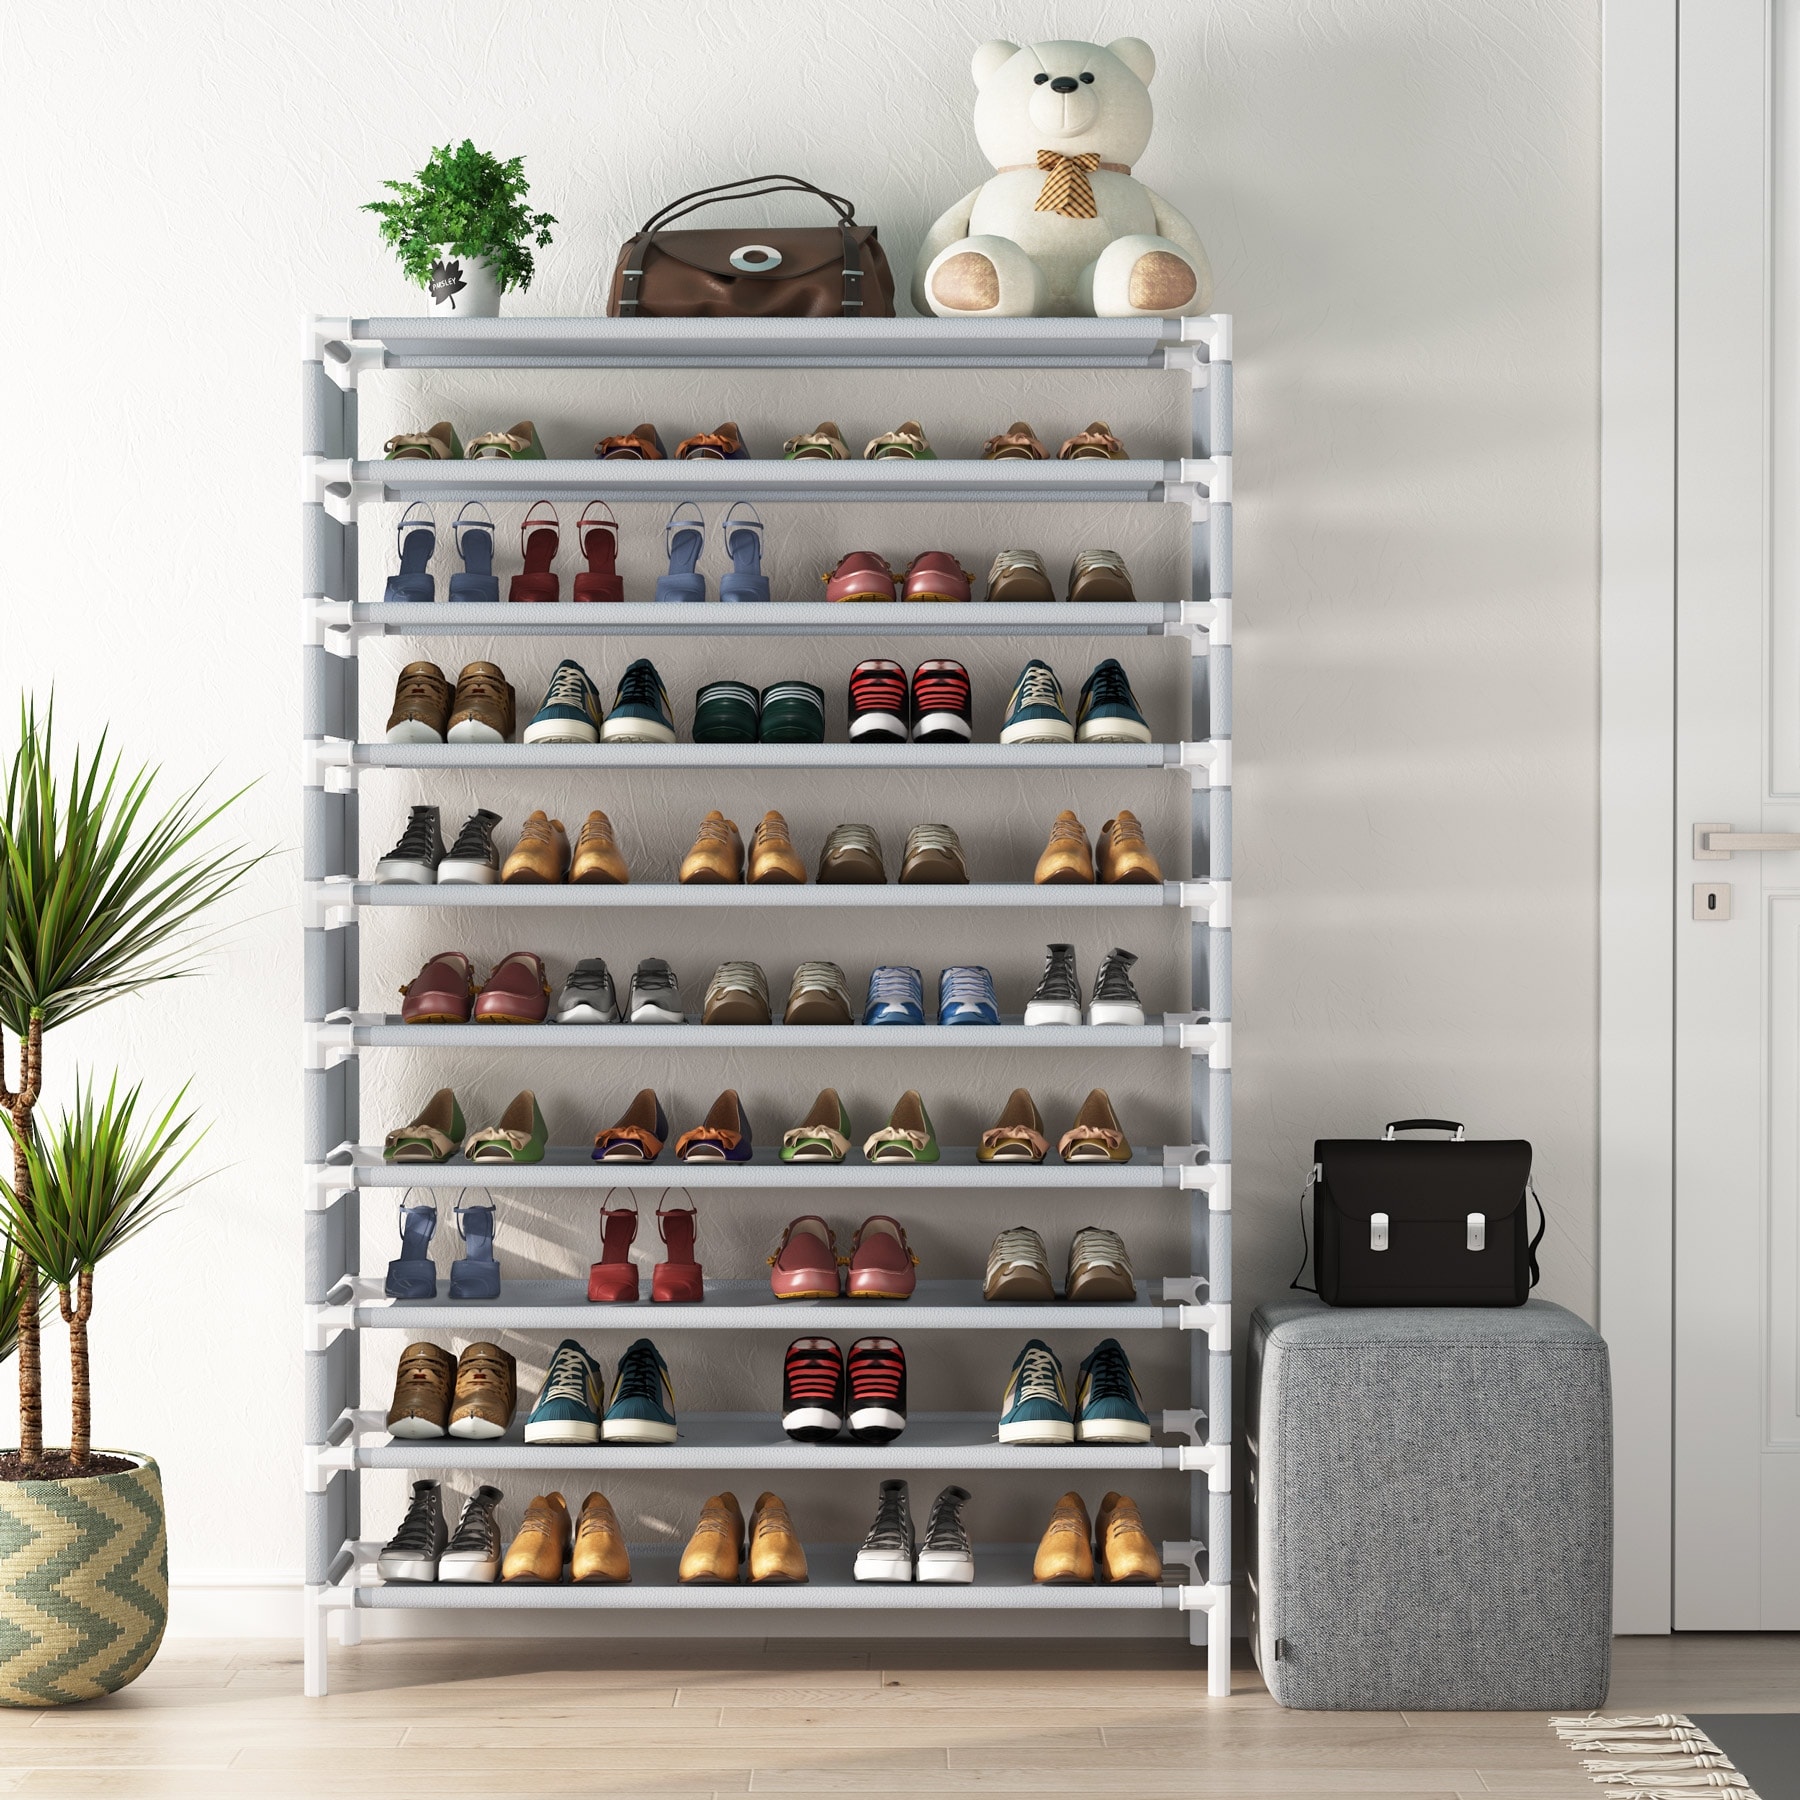 OYREL Shoes Rack 10 Tier Tall Narrow Shoe Rack with Bin Covered Shoe Shelf Storage Organizer Closet Stackable Shoe Stand